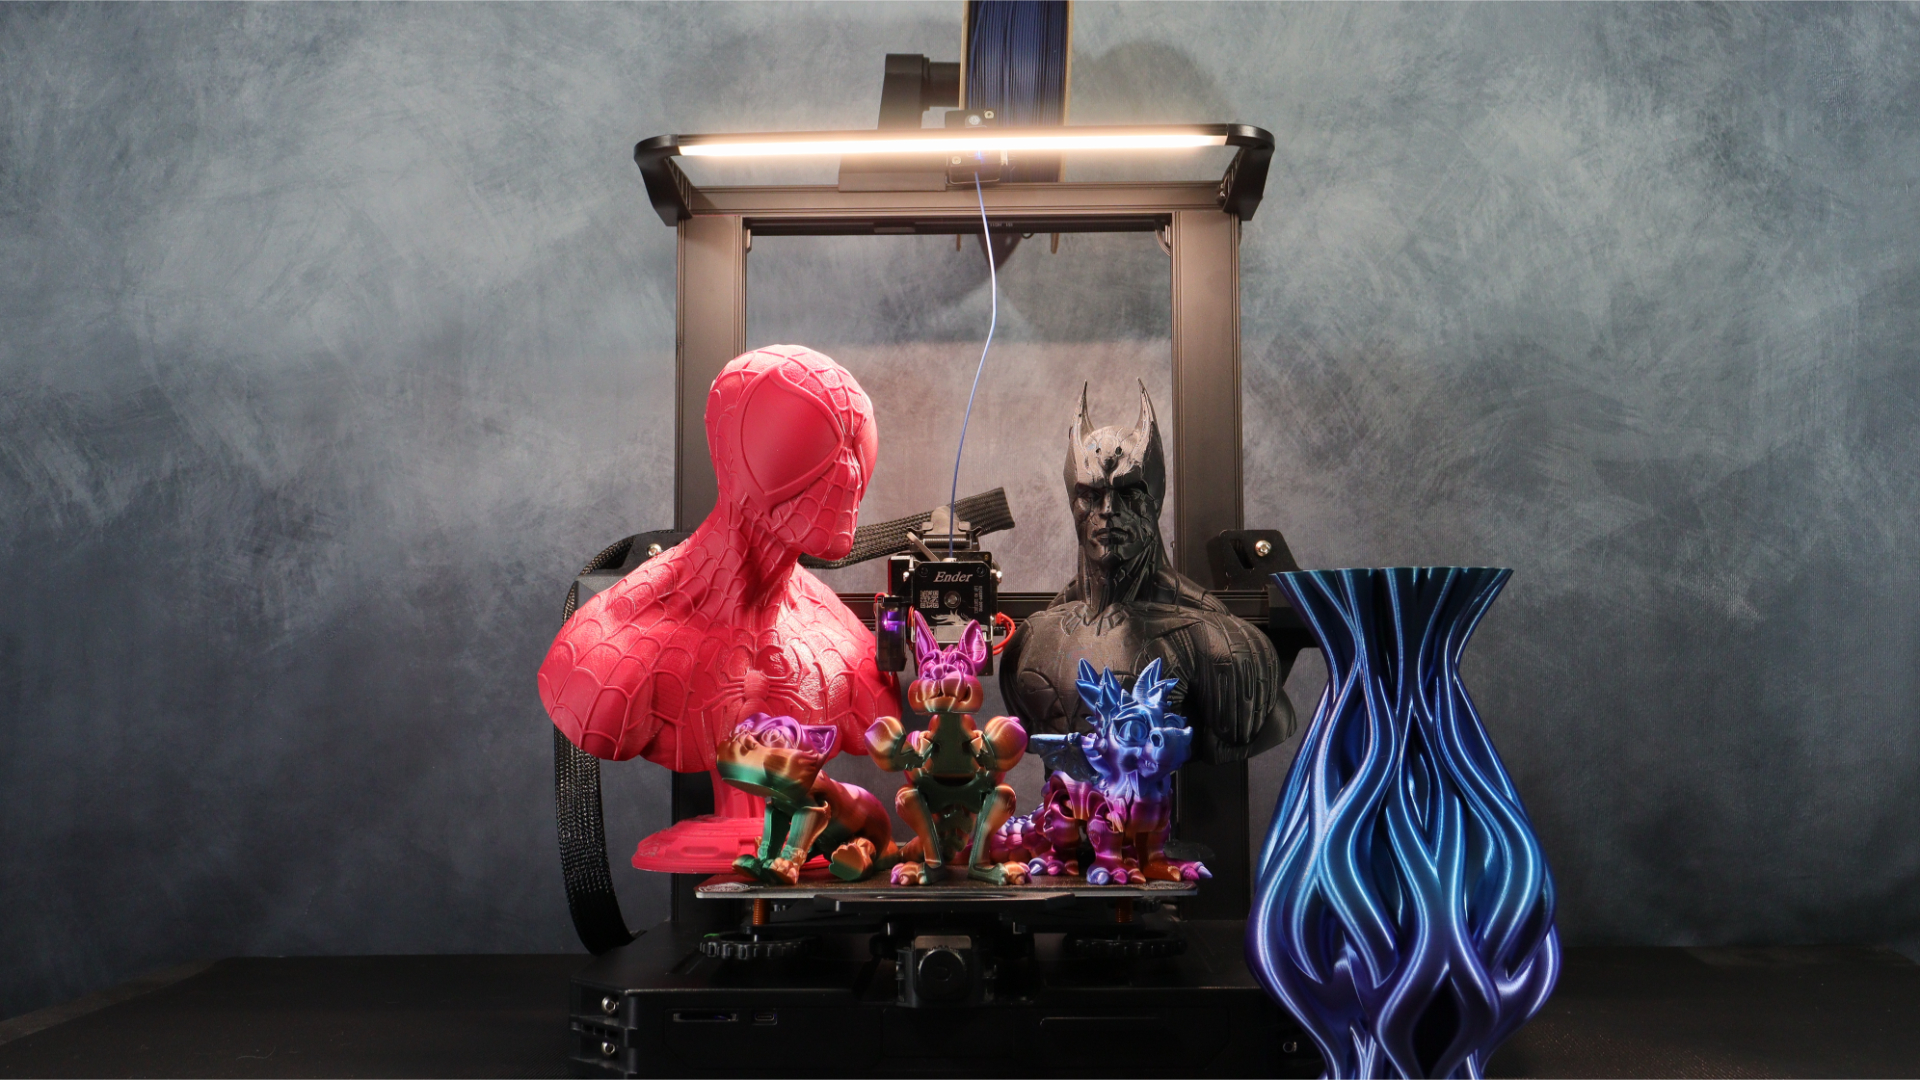 Best 3D Printer Deals: Save Up to $388 on Elegoo, Creality